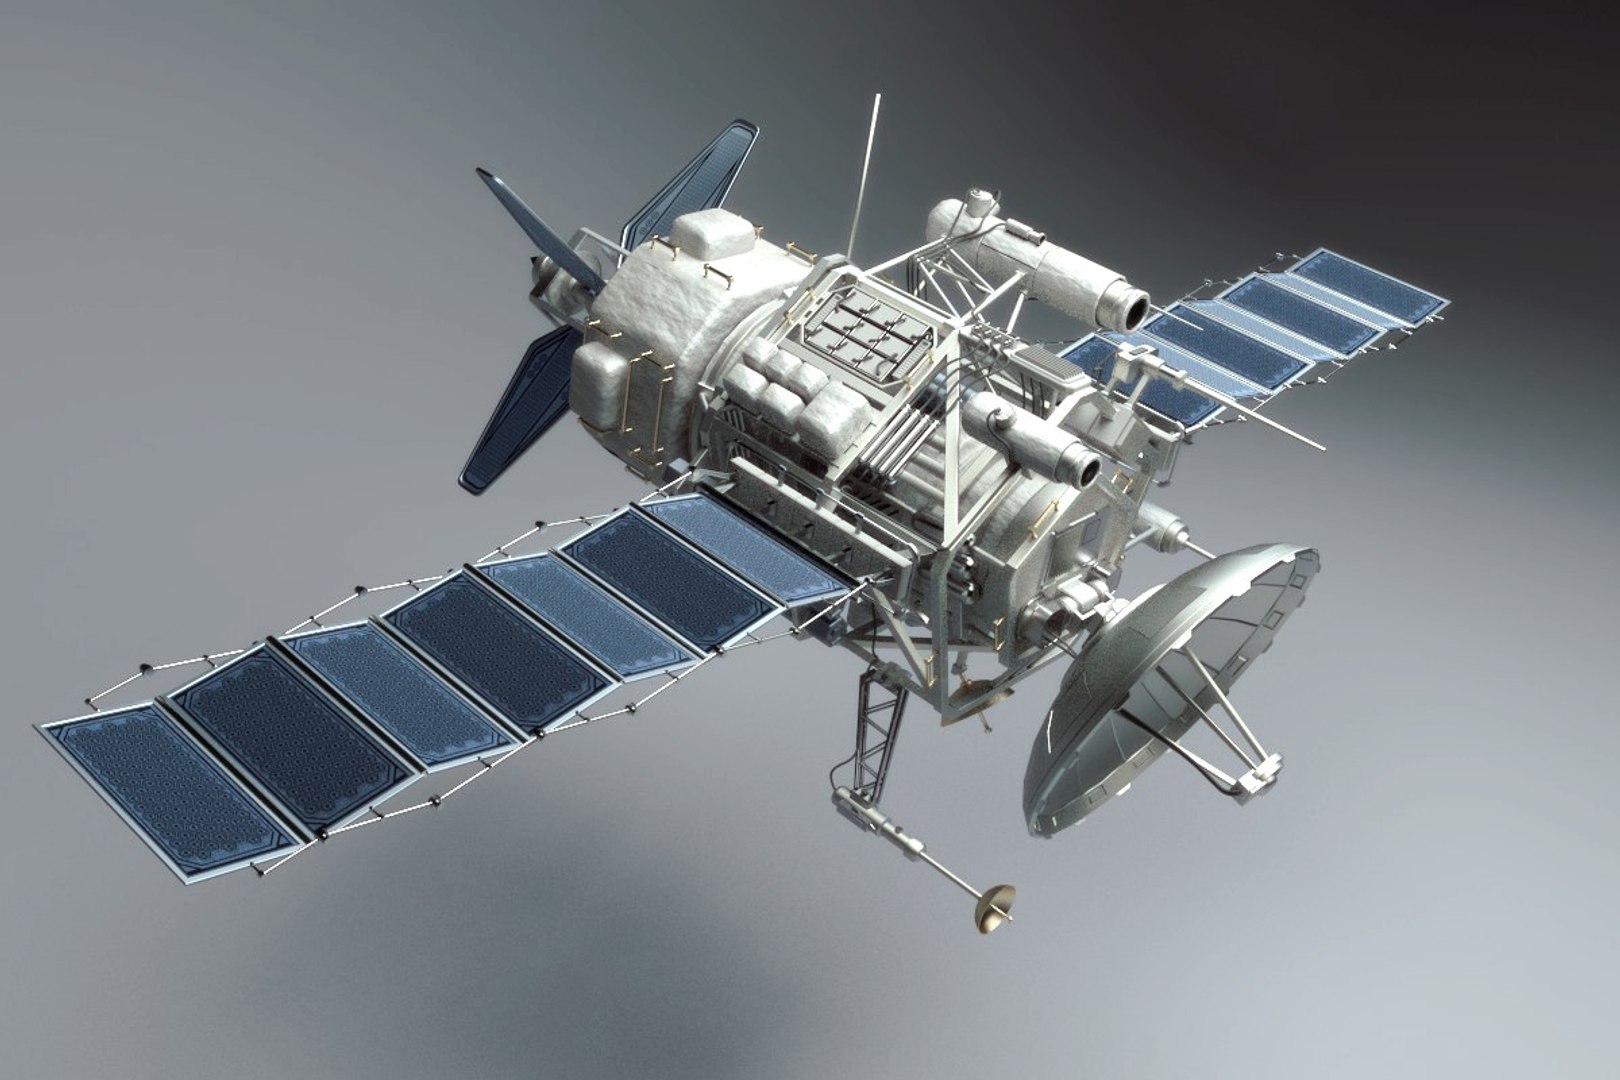 Мод на спутник. Satellite 3d model. Модель спутника. Спутник 3д модель. Космический Спутник 3д модель.